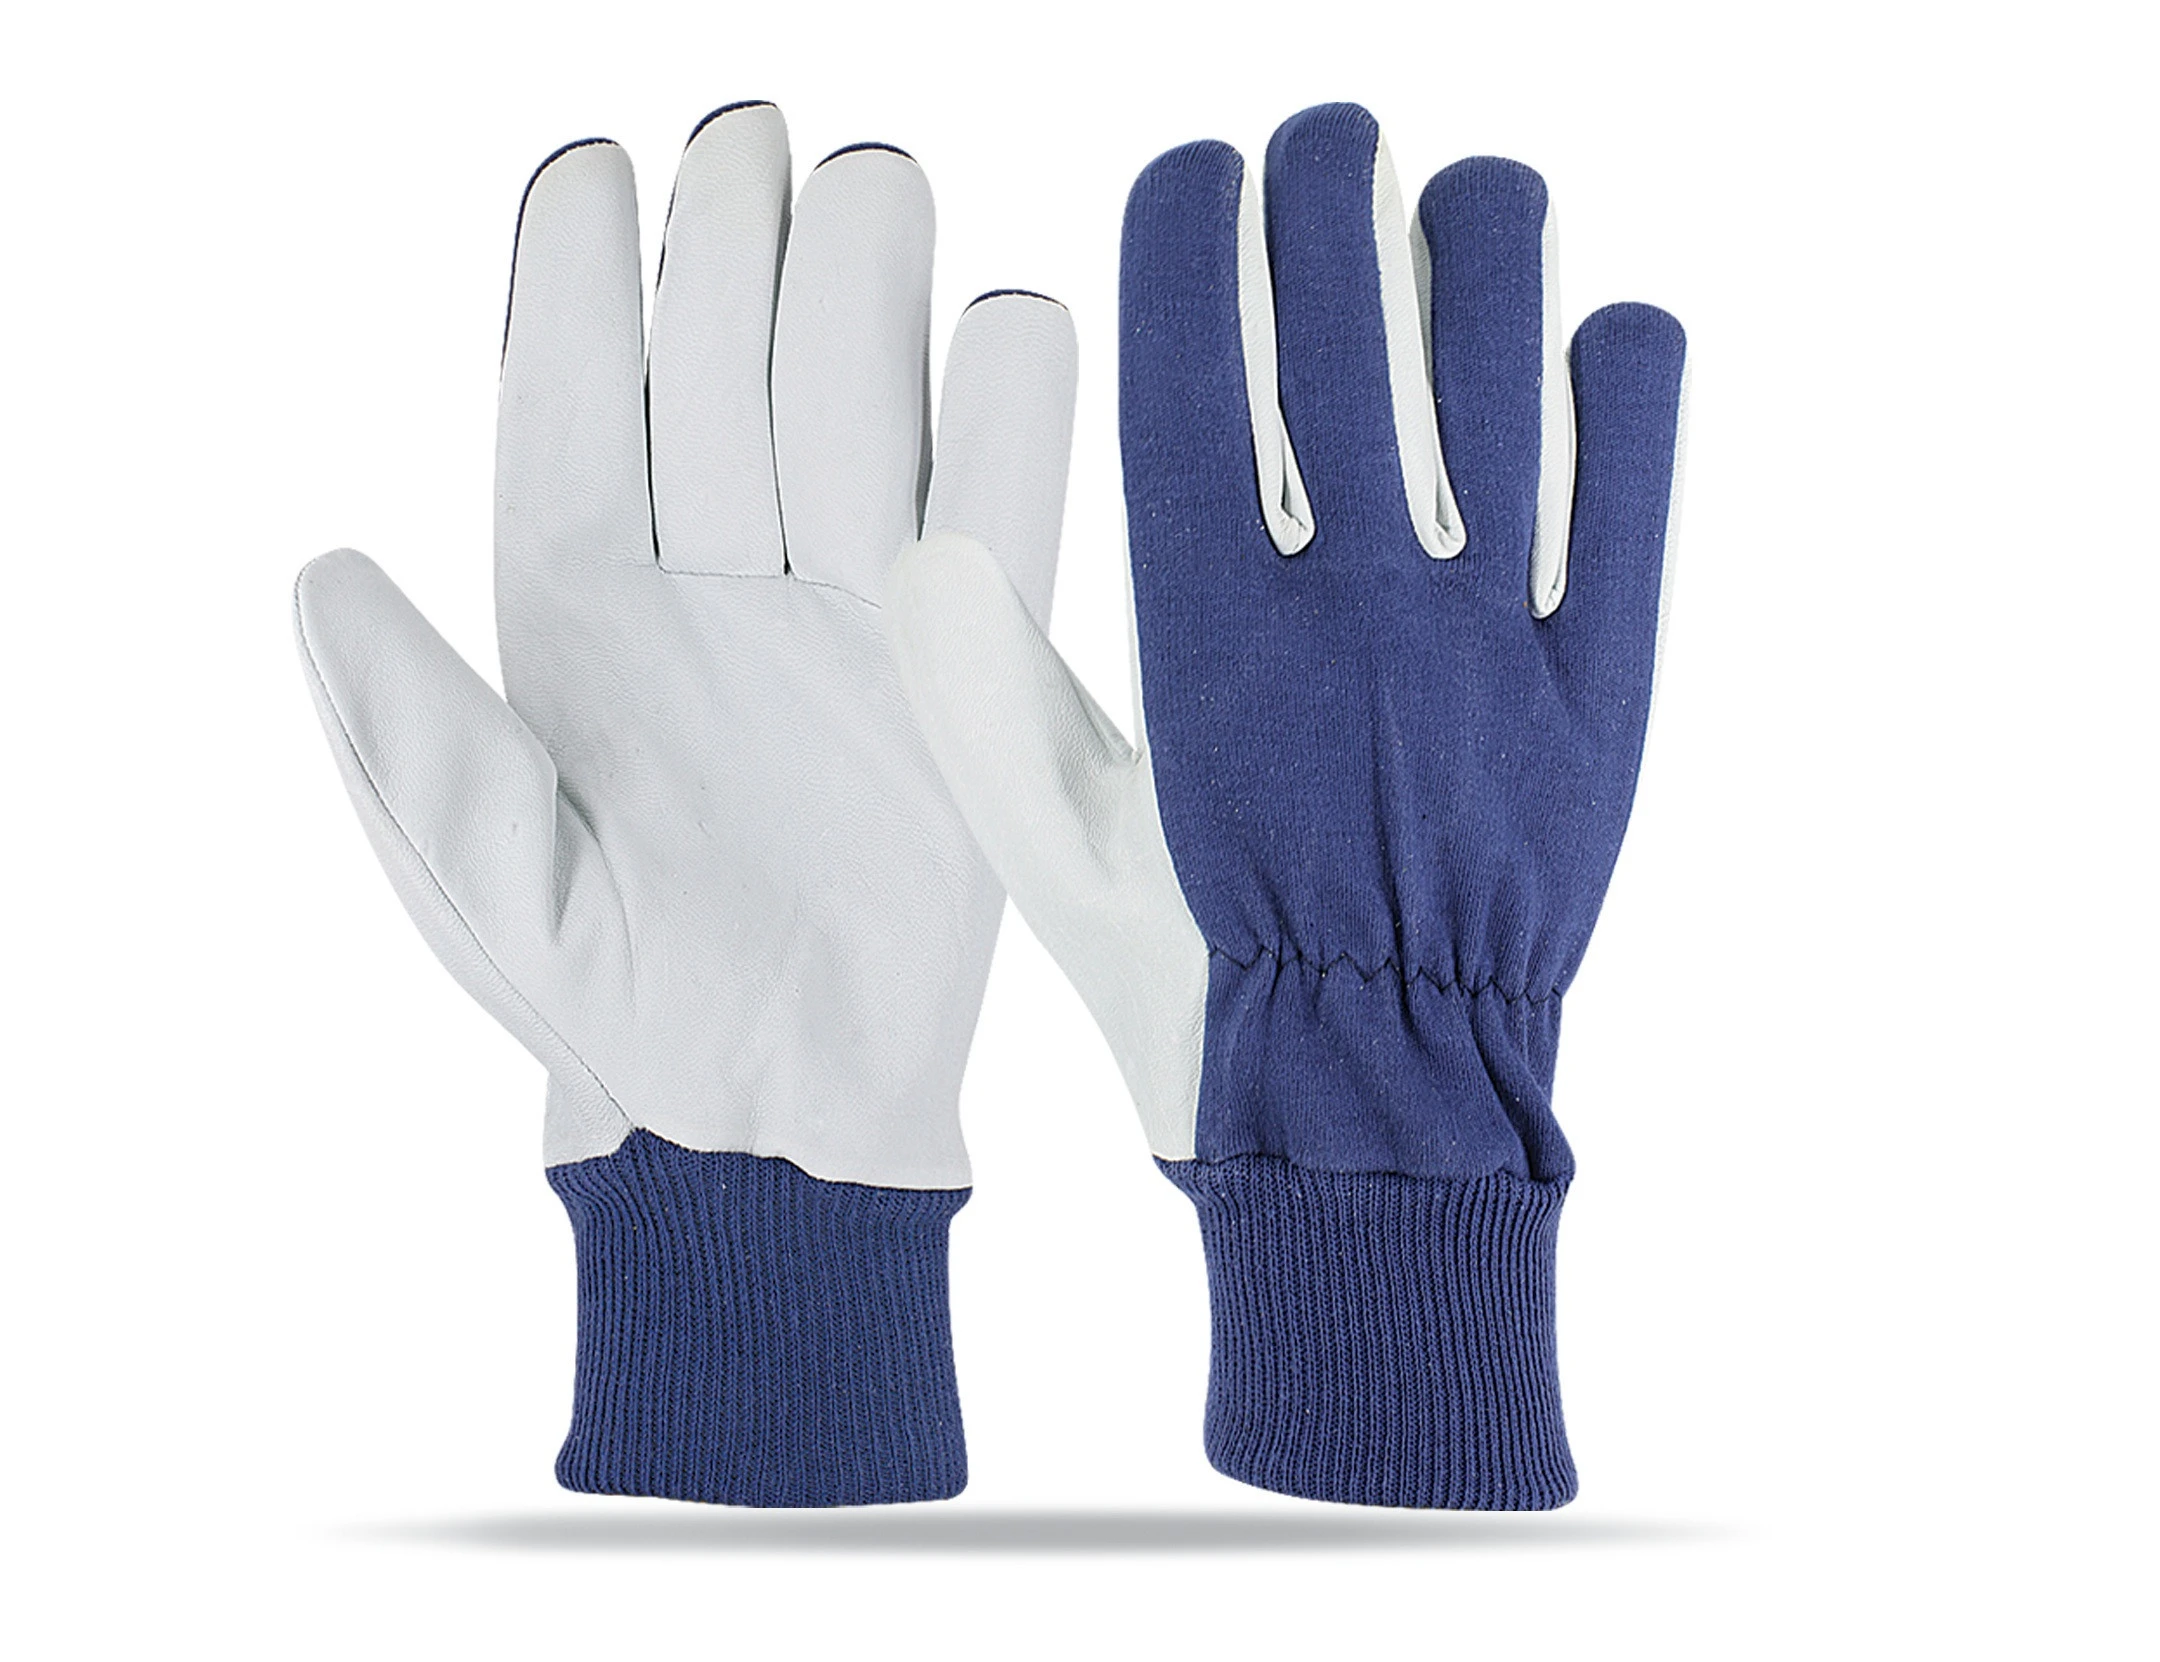 Grain goatskin leather work safety gloves / Assembly Gloves / Working Gloves